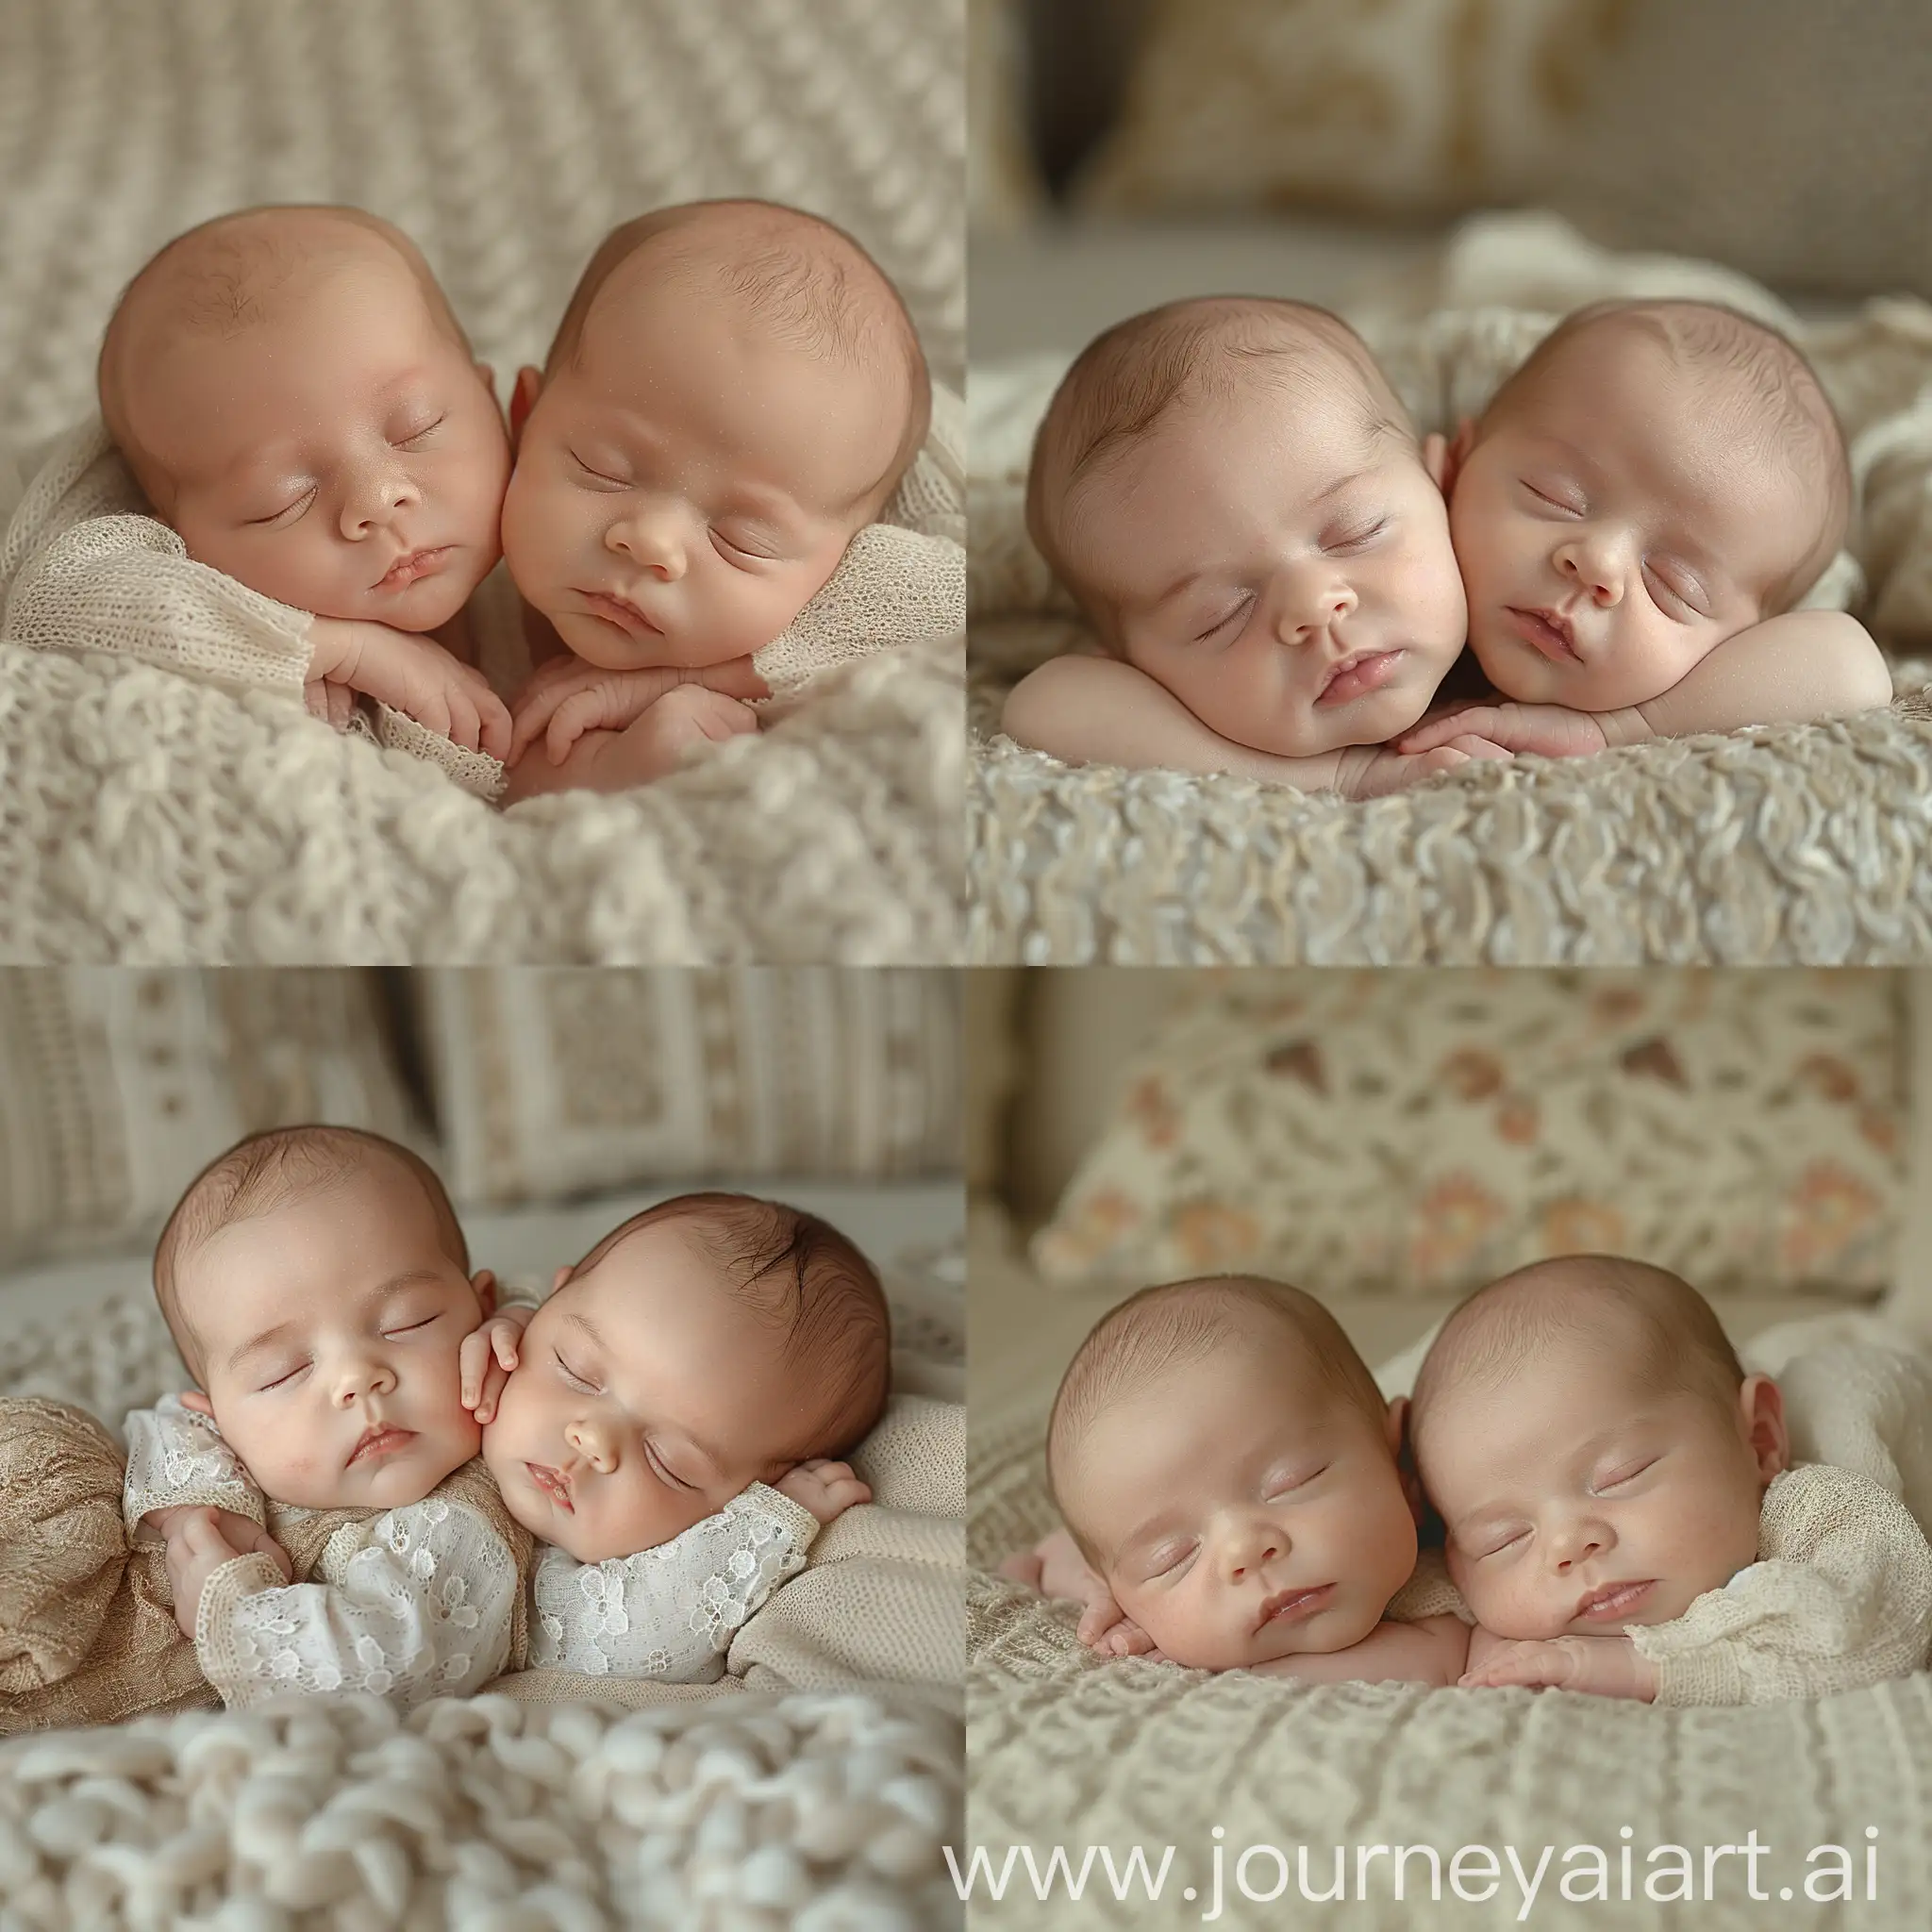 Peaceful-Sleeping-Twin-Newborns-in-Realistic-Portrait-Photograph